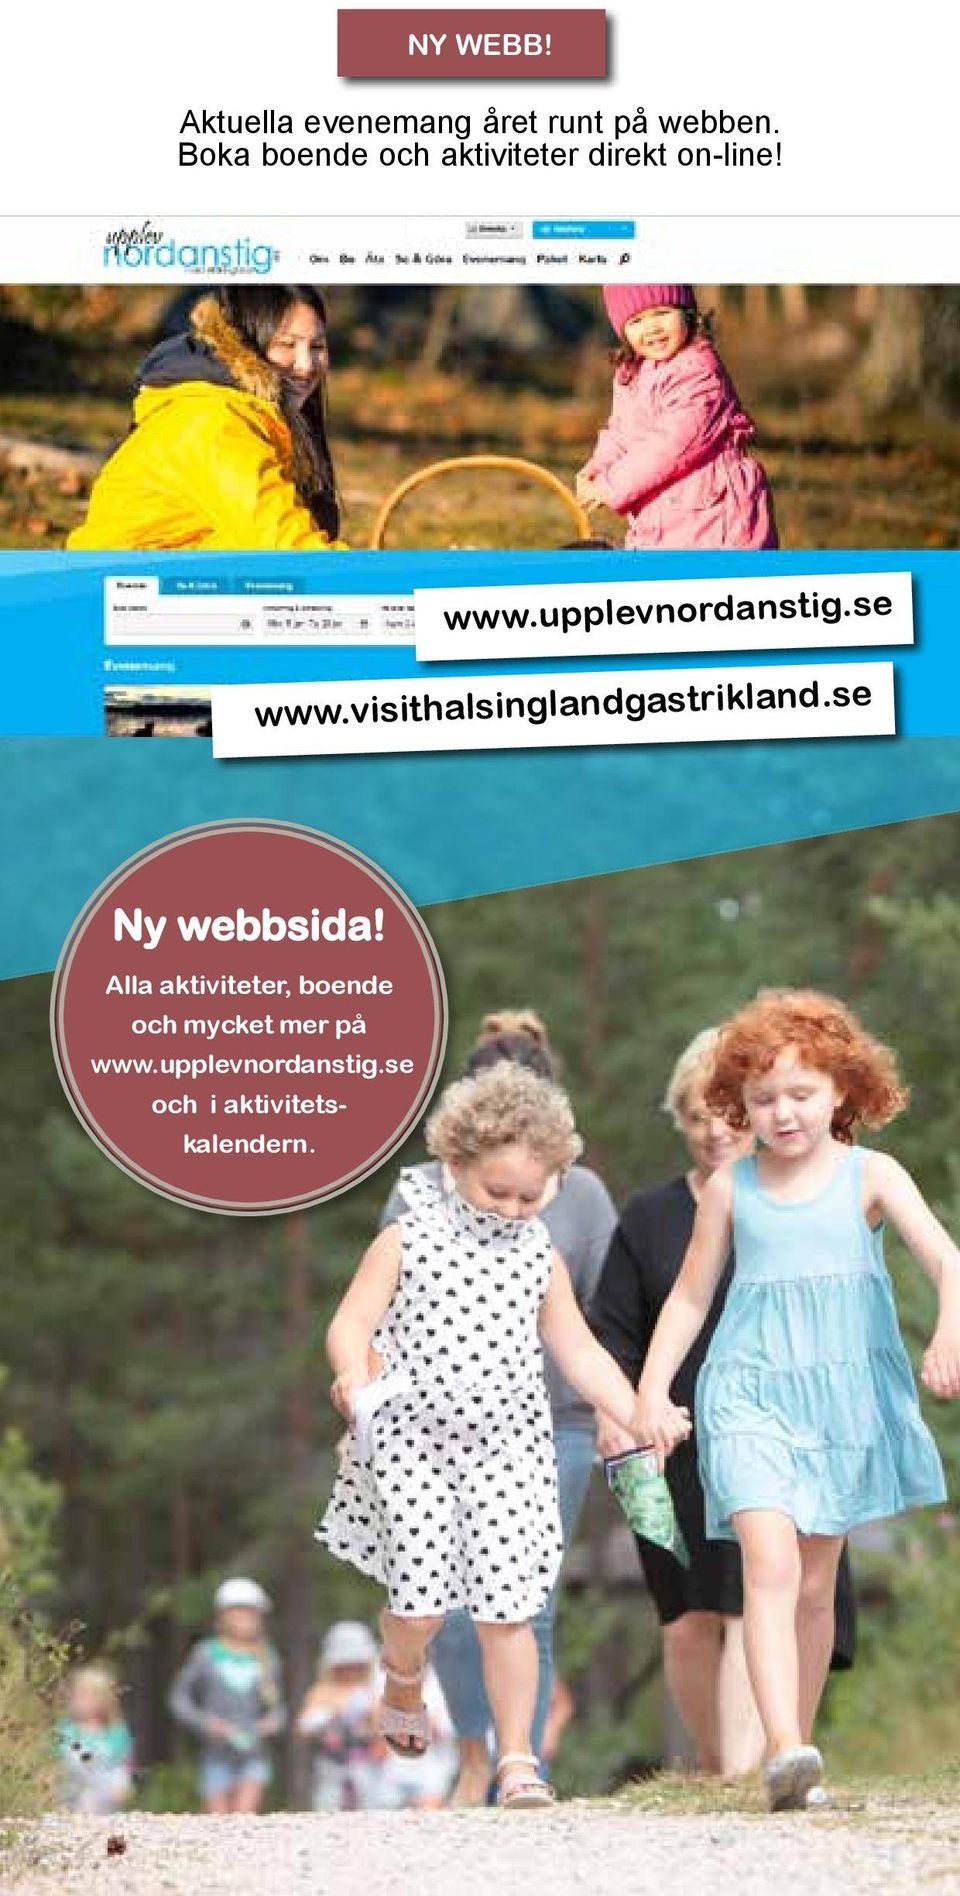 se www.visithalsinglandgastrikland.se Ny webbsida!